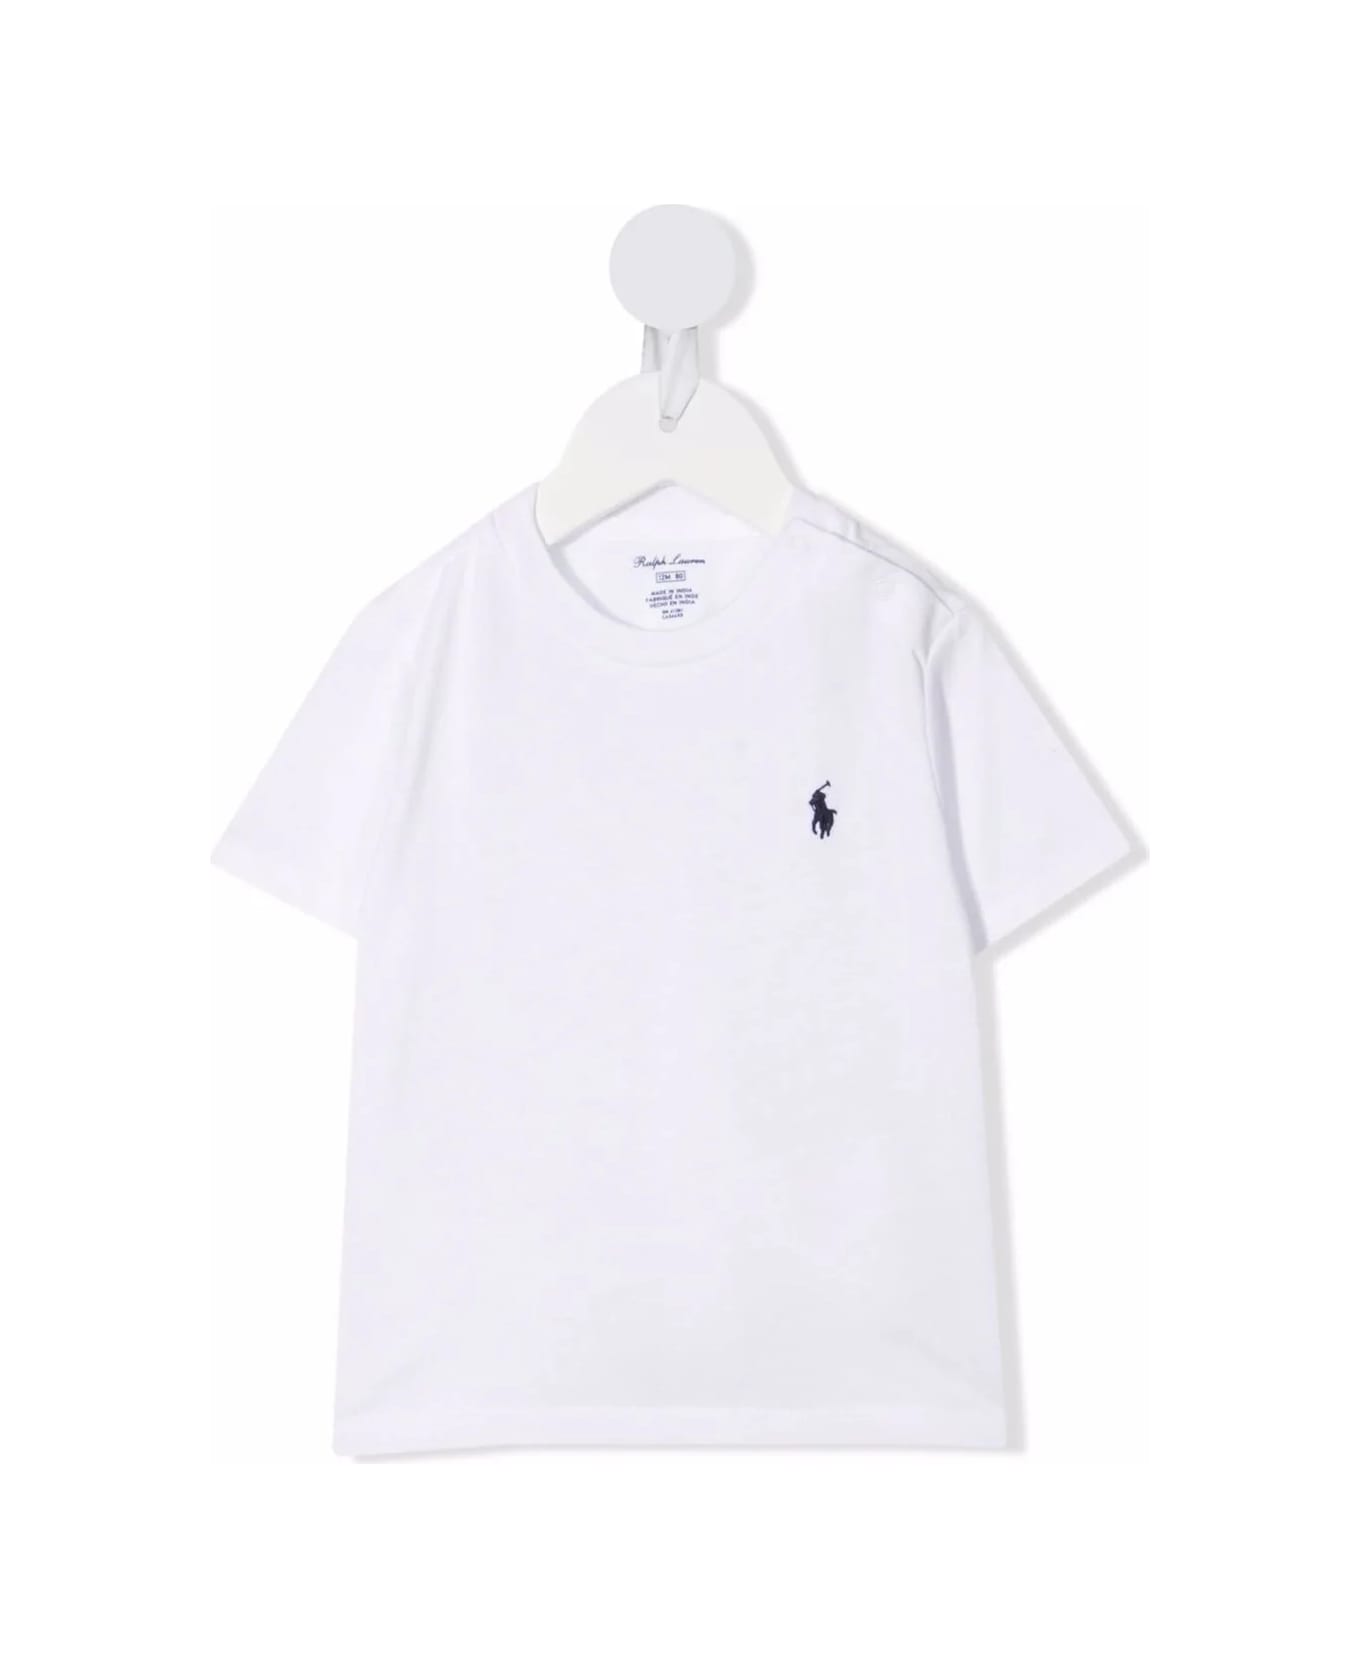 Ralph Lauren White T-shirt With Navy Blue Pony - White